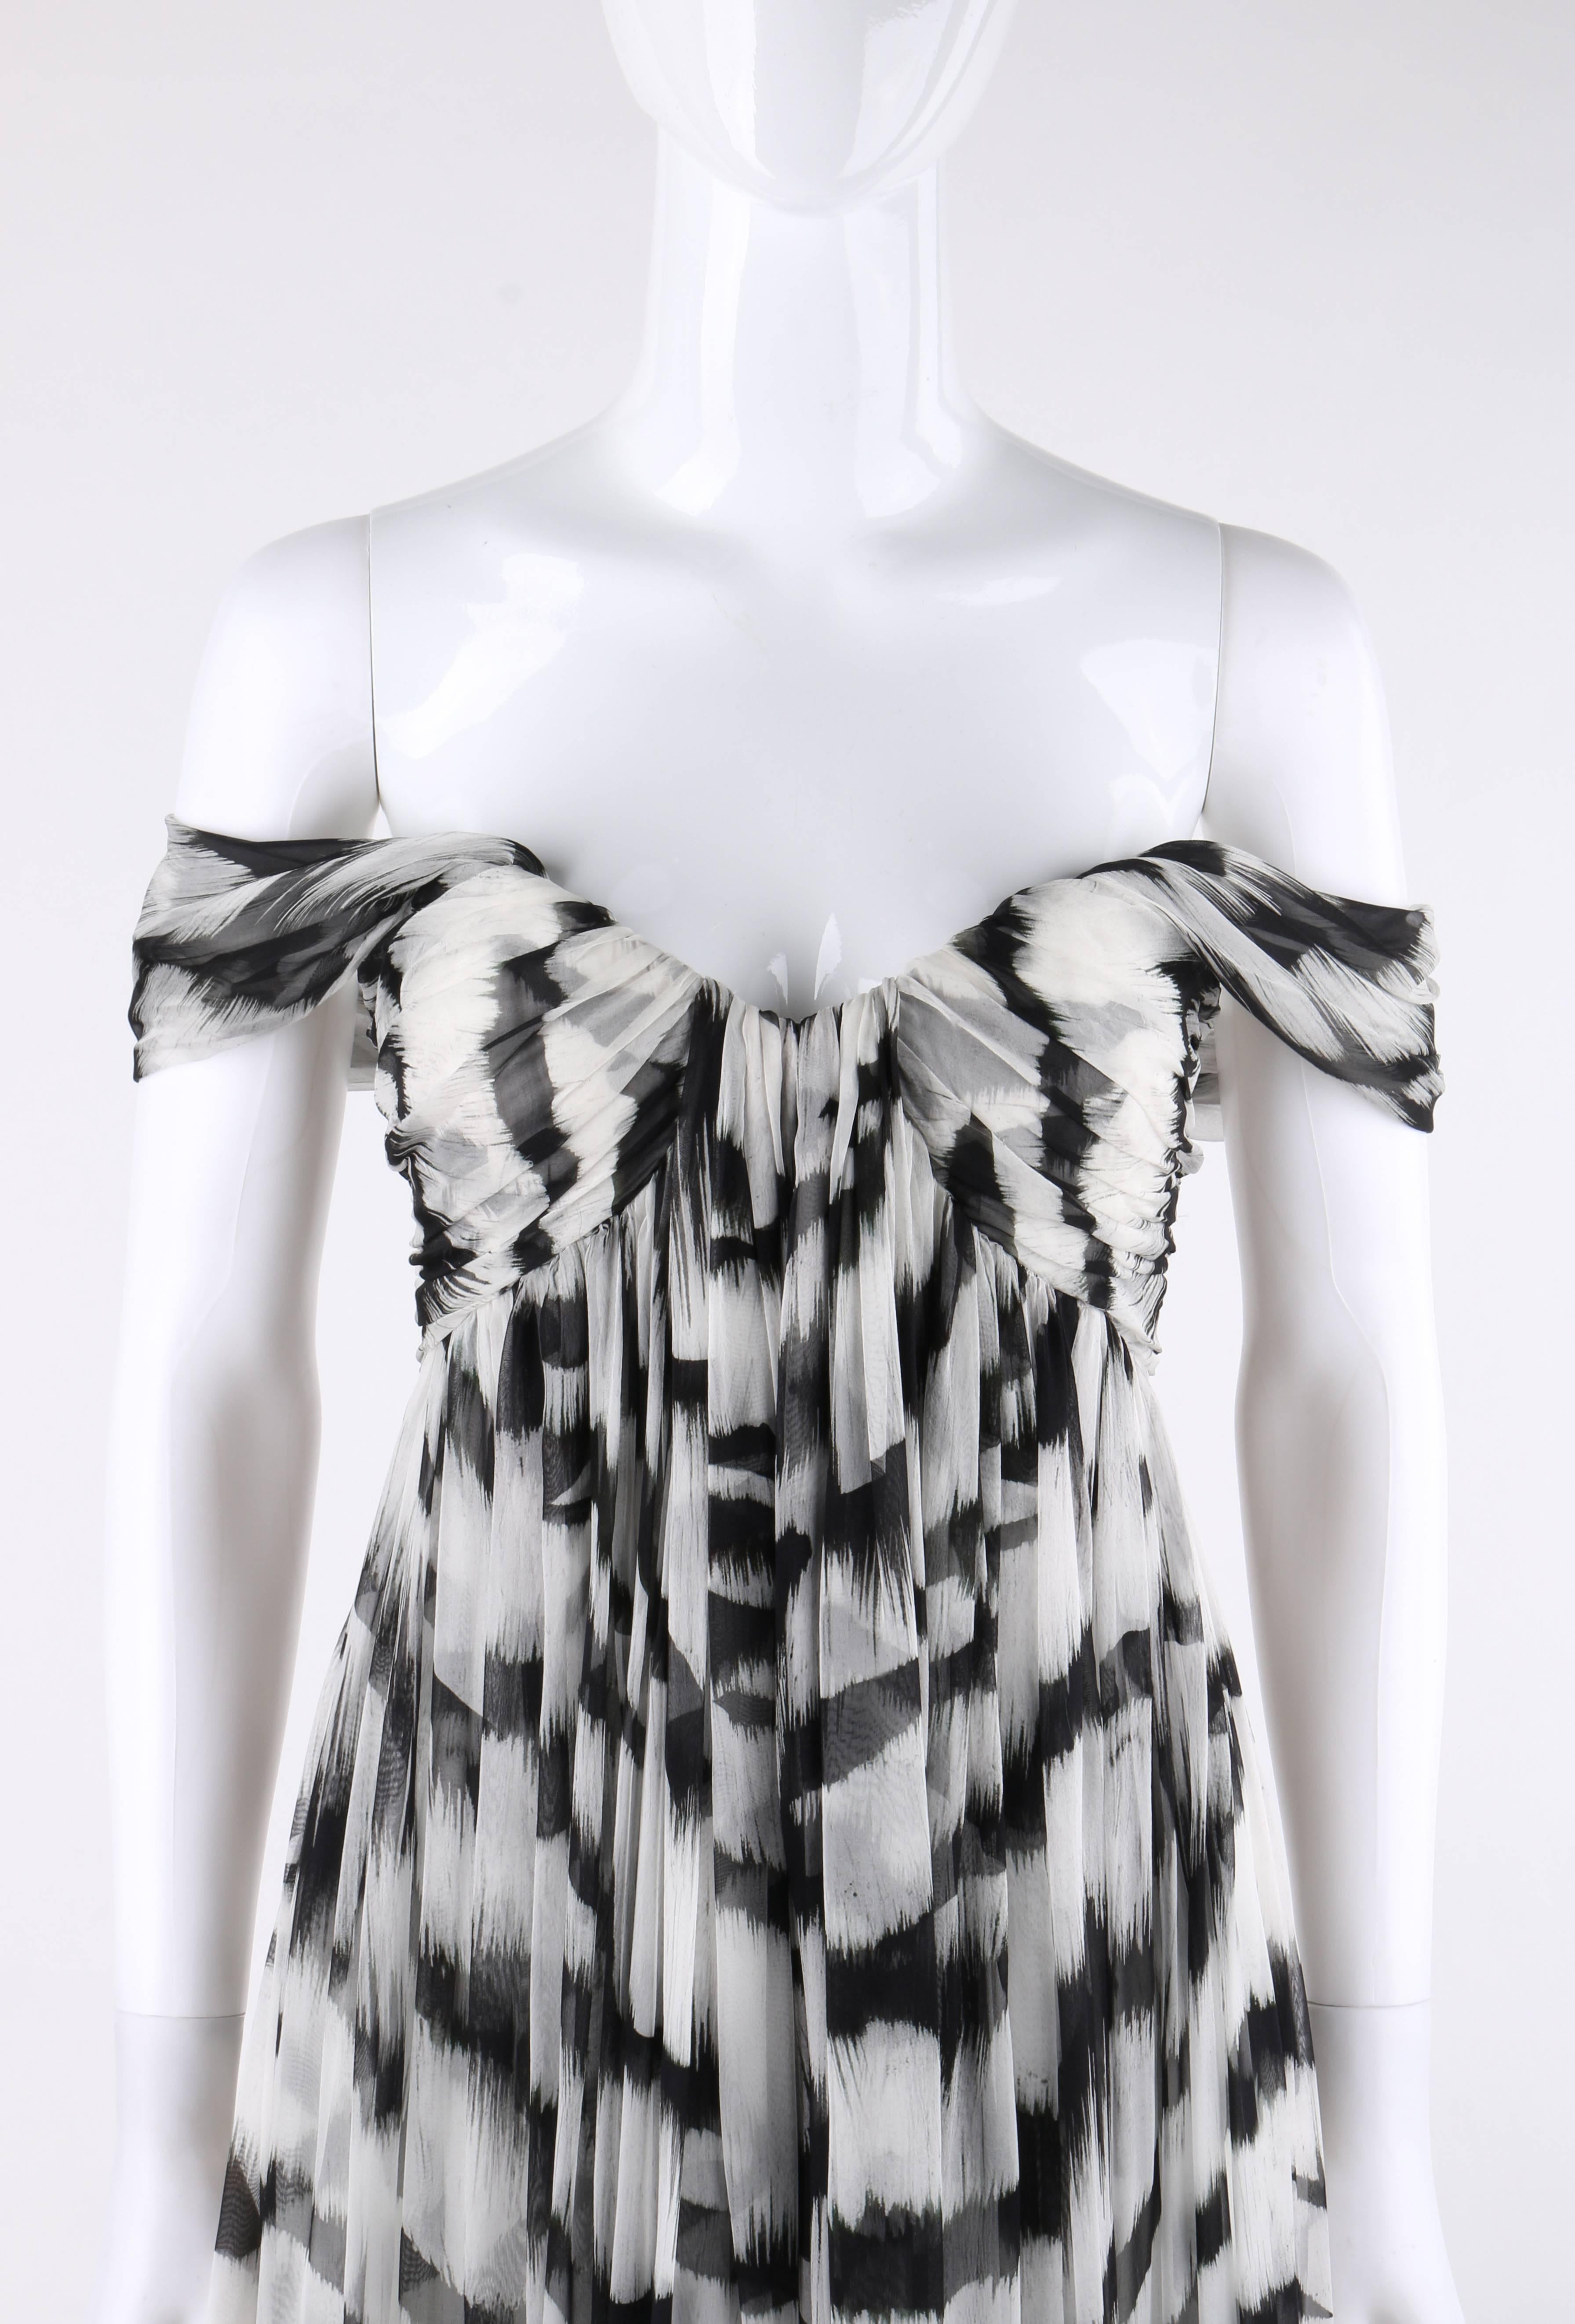 Gray ALEXANDER McQUEEN S/S 2012 White Tiger Stripe Silk Chiffon Evening Gown NWT